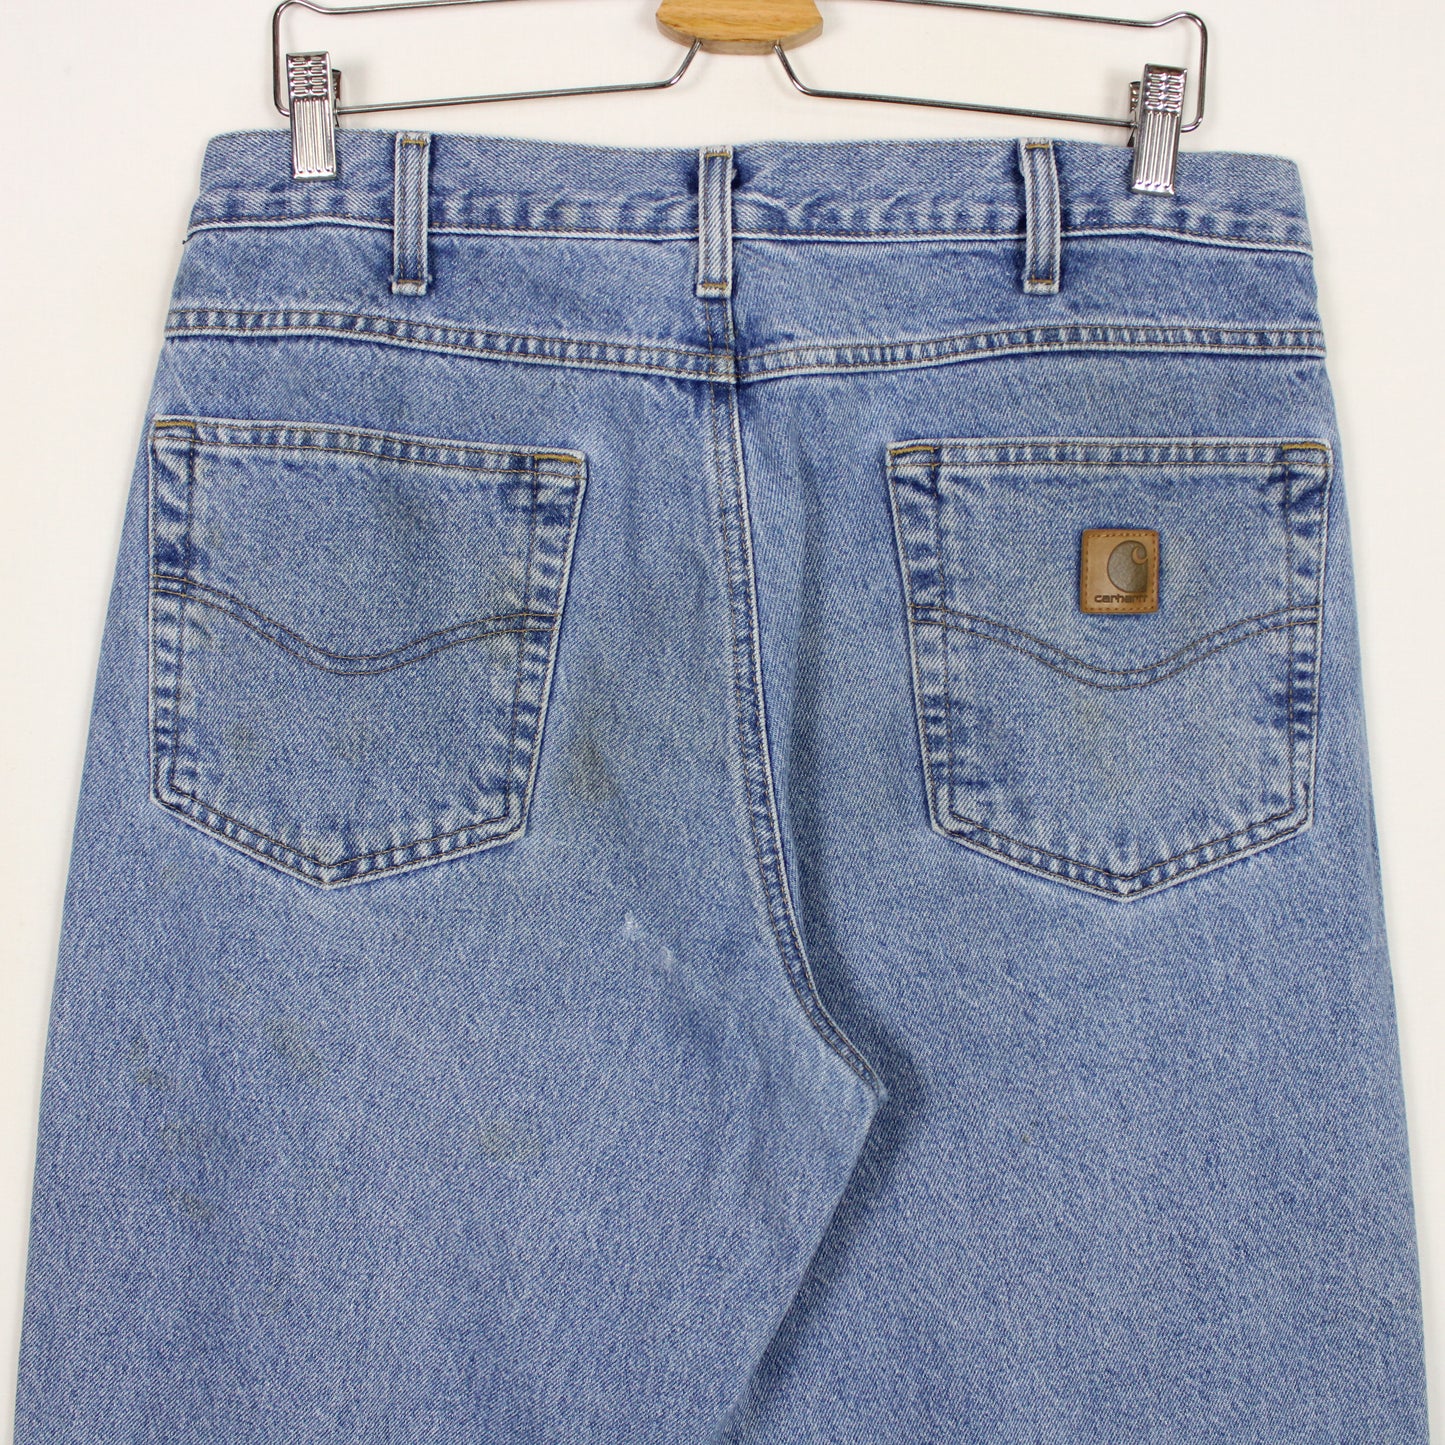 Vintage Carhartt Denim Pants - 34x32